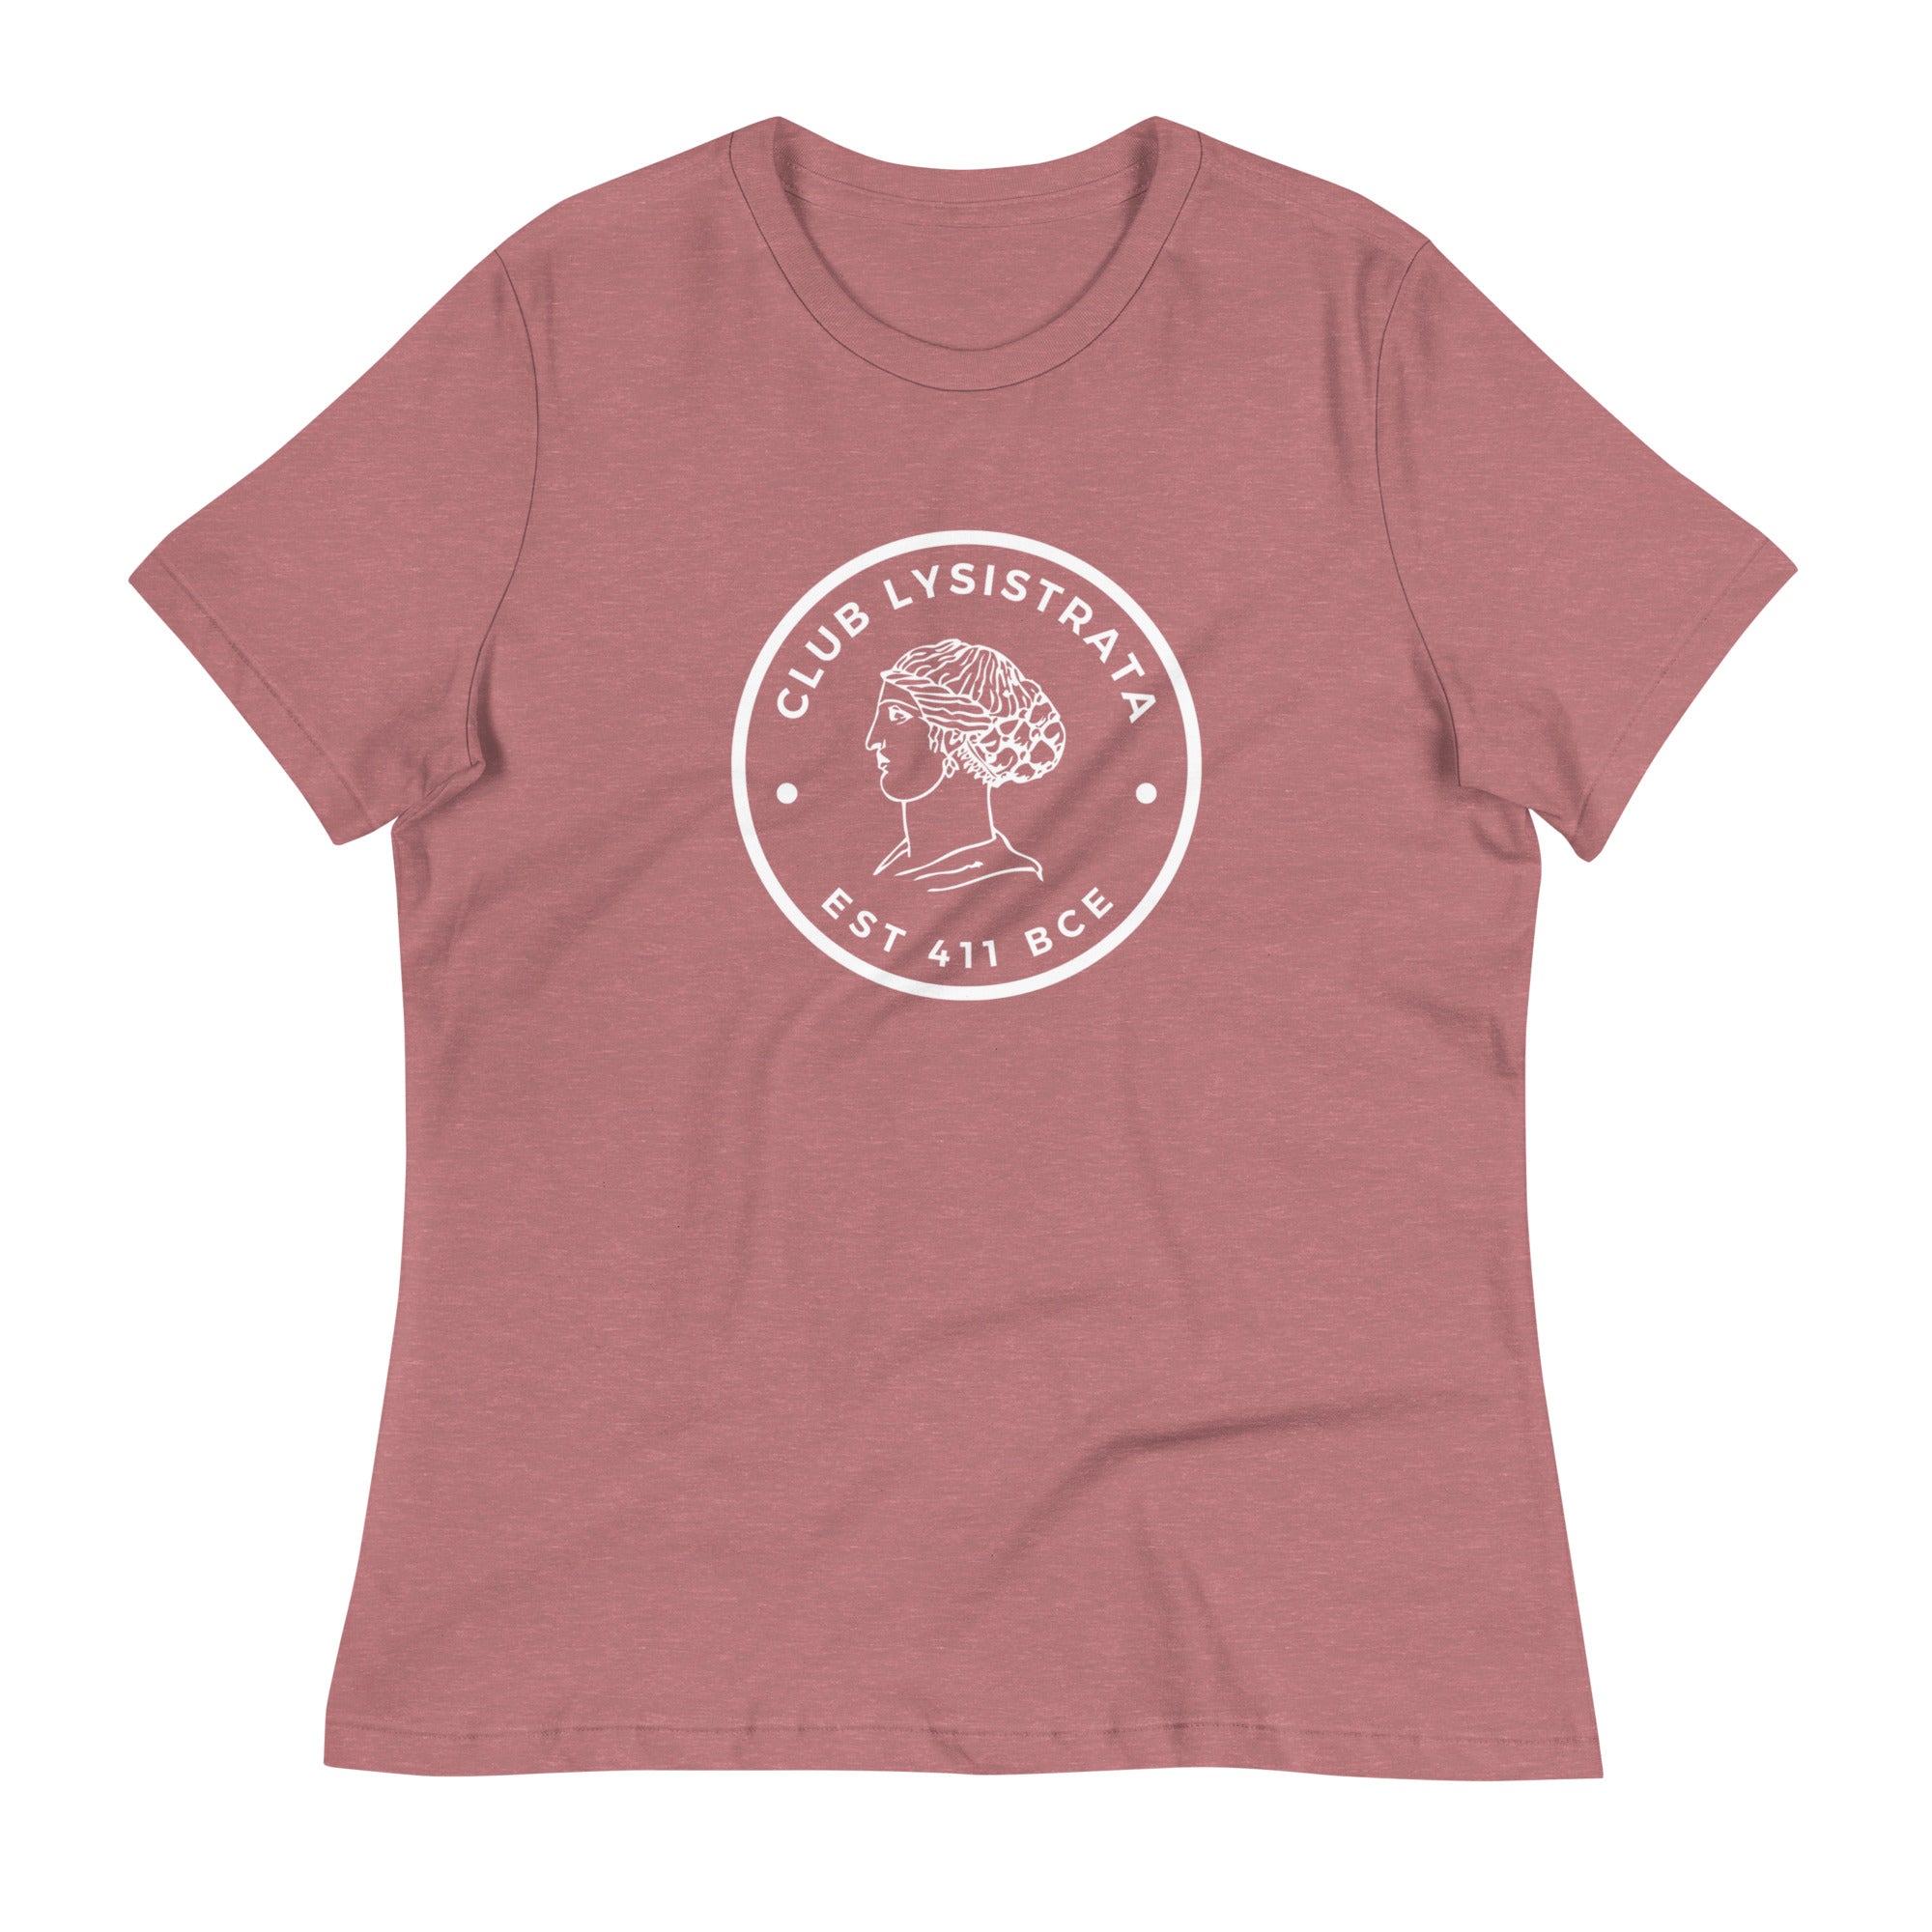 Club Lysistrata - Women's Relaxed T-Shirt